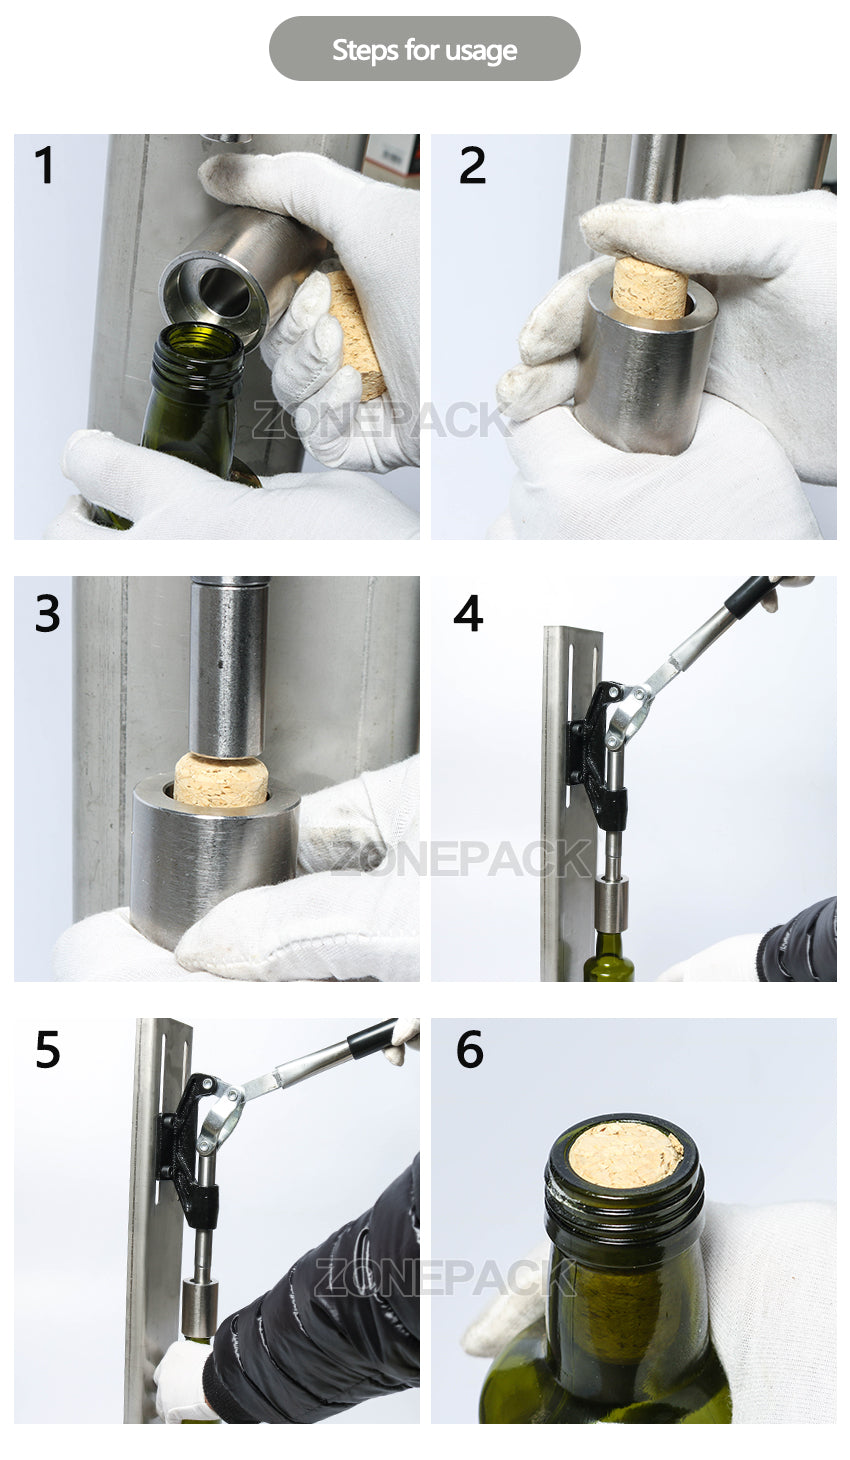 ZONEPACK Manual Stainless Steel Corkers Wine Corking Machine Capping Tool Brewed Wine Bottle Cork Press Inserting Machine